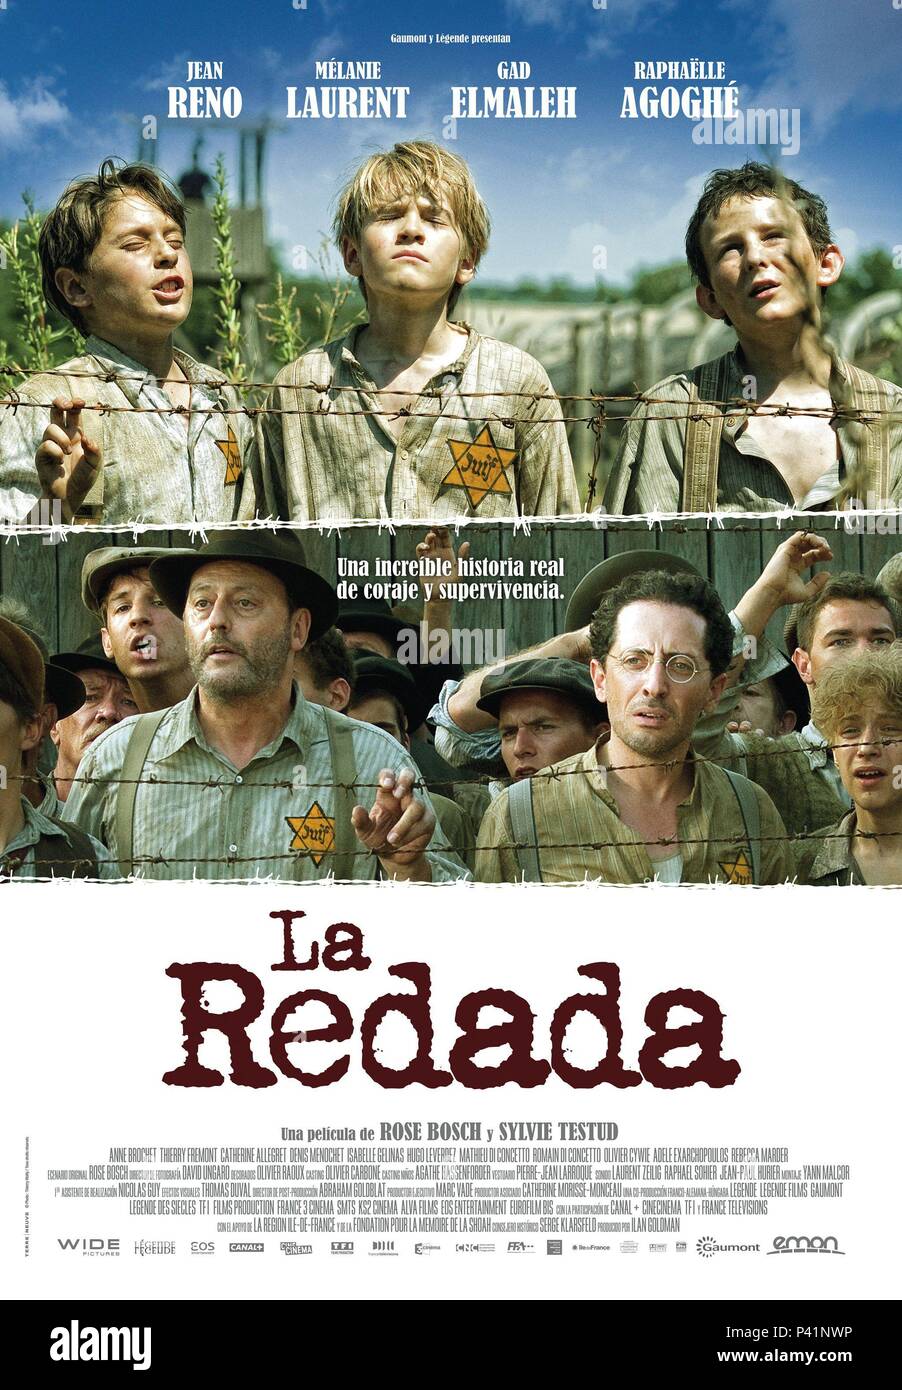 Original Film Title: LA RAFLE. English Title: THE ROUND UP. Film Director: ROSE  BOSCH. Year: 2010. Credit: LEGENDE FILMS / Album Stock Photo - Alamy